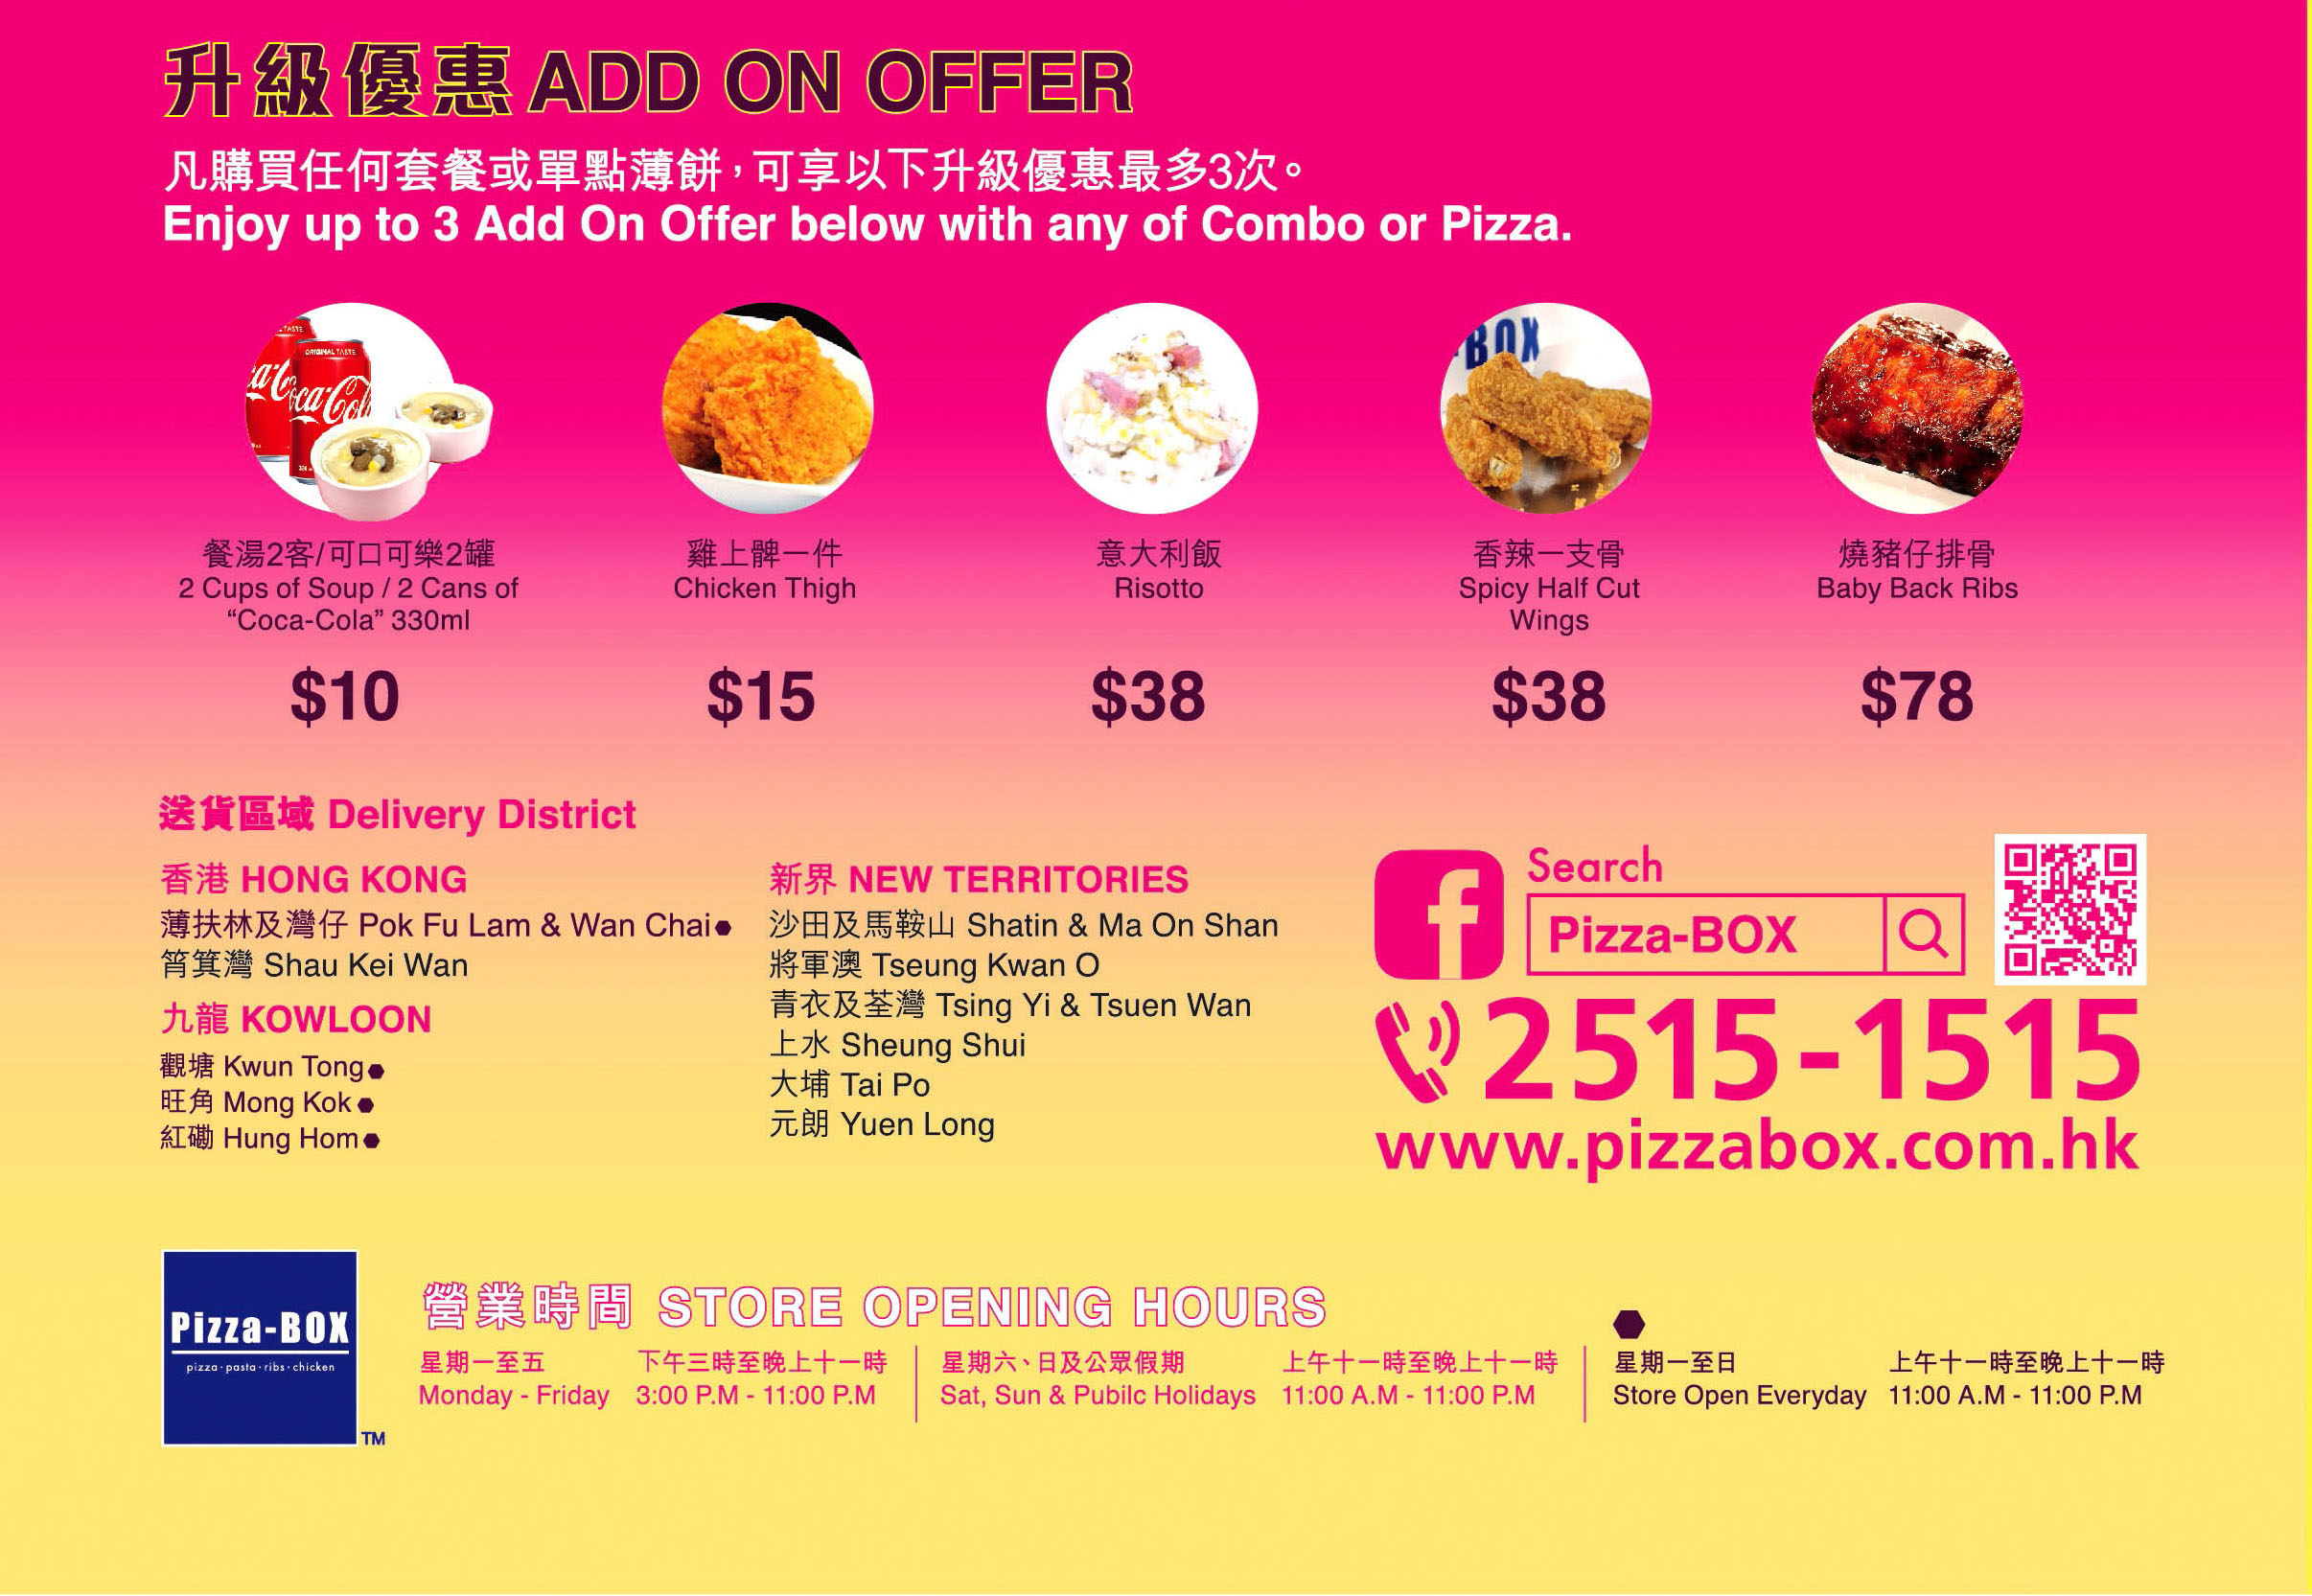 pizza box 香港外賣薄餅速遞服務 hong kong pizza box delivery menu price package 特價錢美食外賣紙餐劵餐單價目表優惠價格餐牌